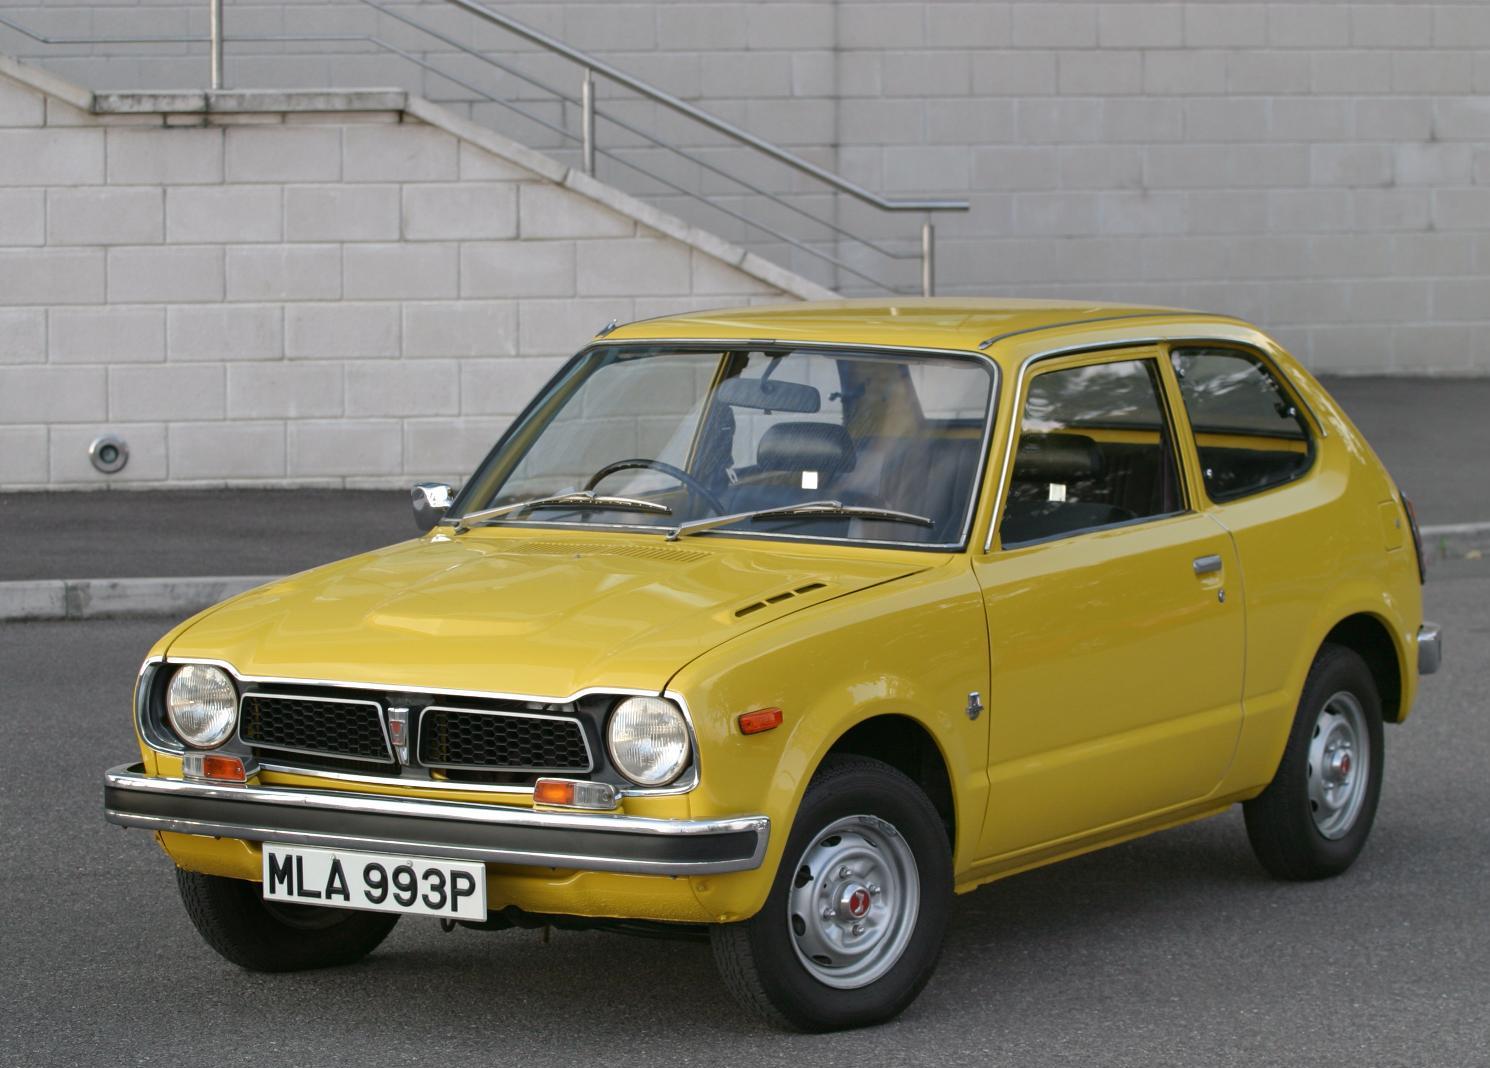 1. Civic 1972-1979